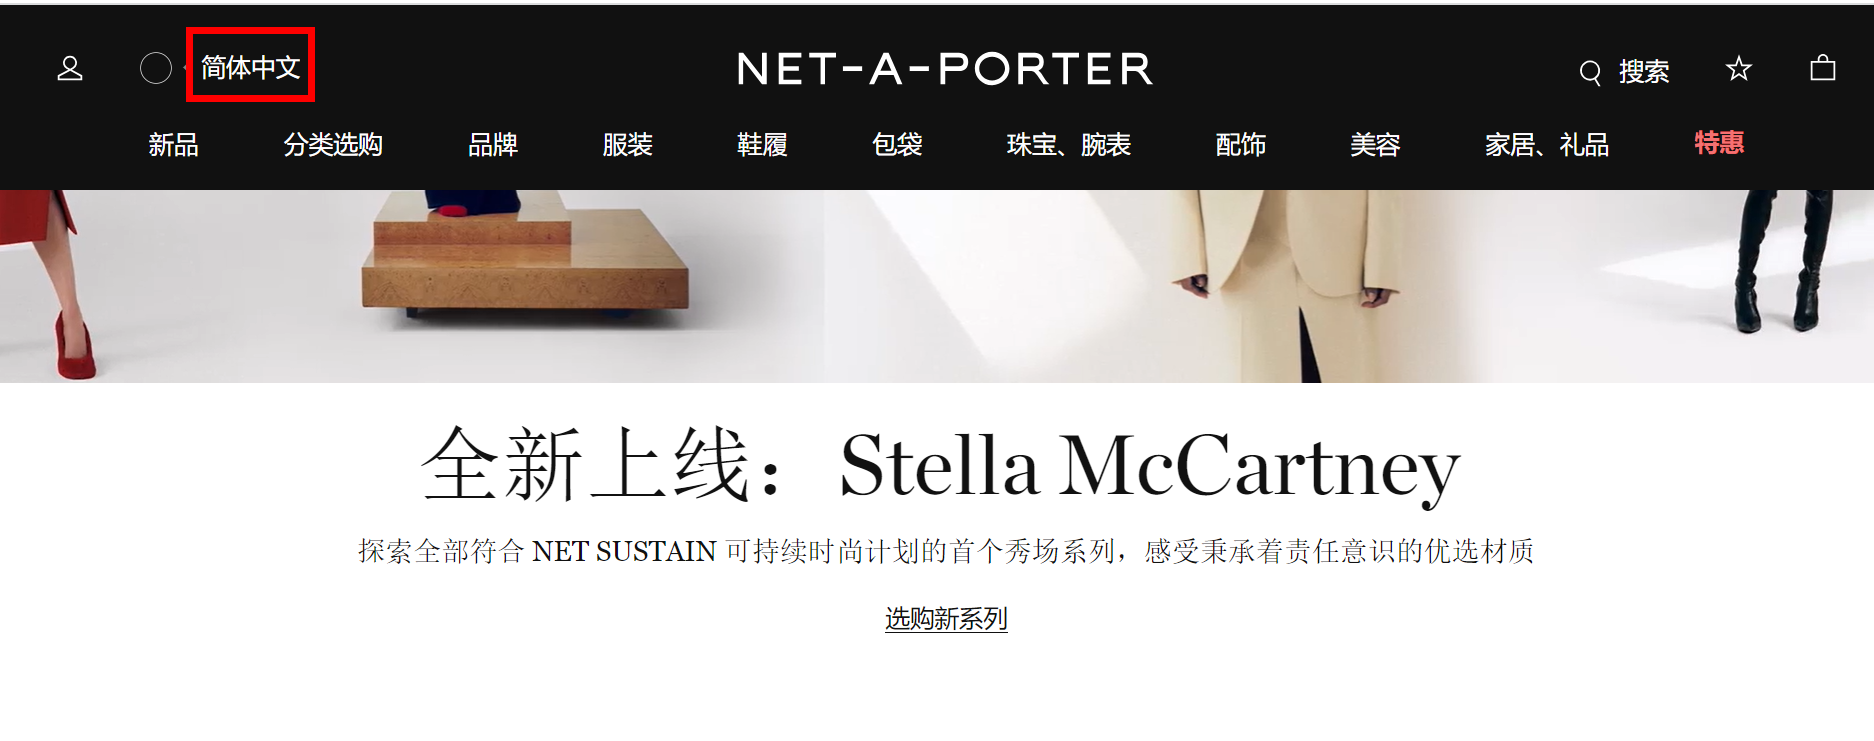 NET-A-PORTER 國外網購好好買 回購戰利品分享 @菲菲吳小姐